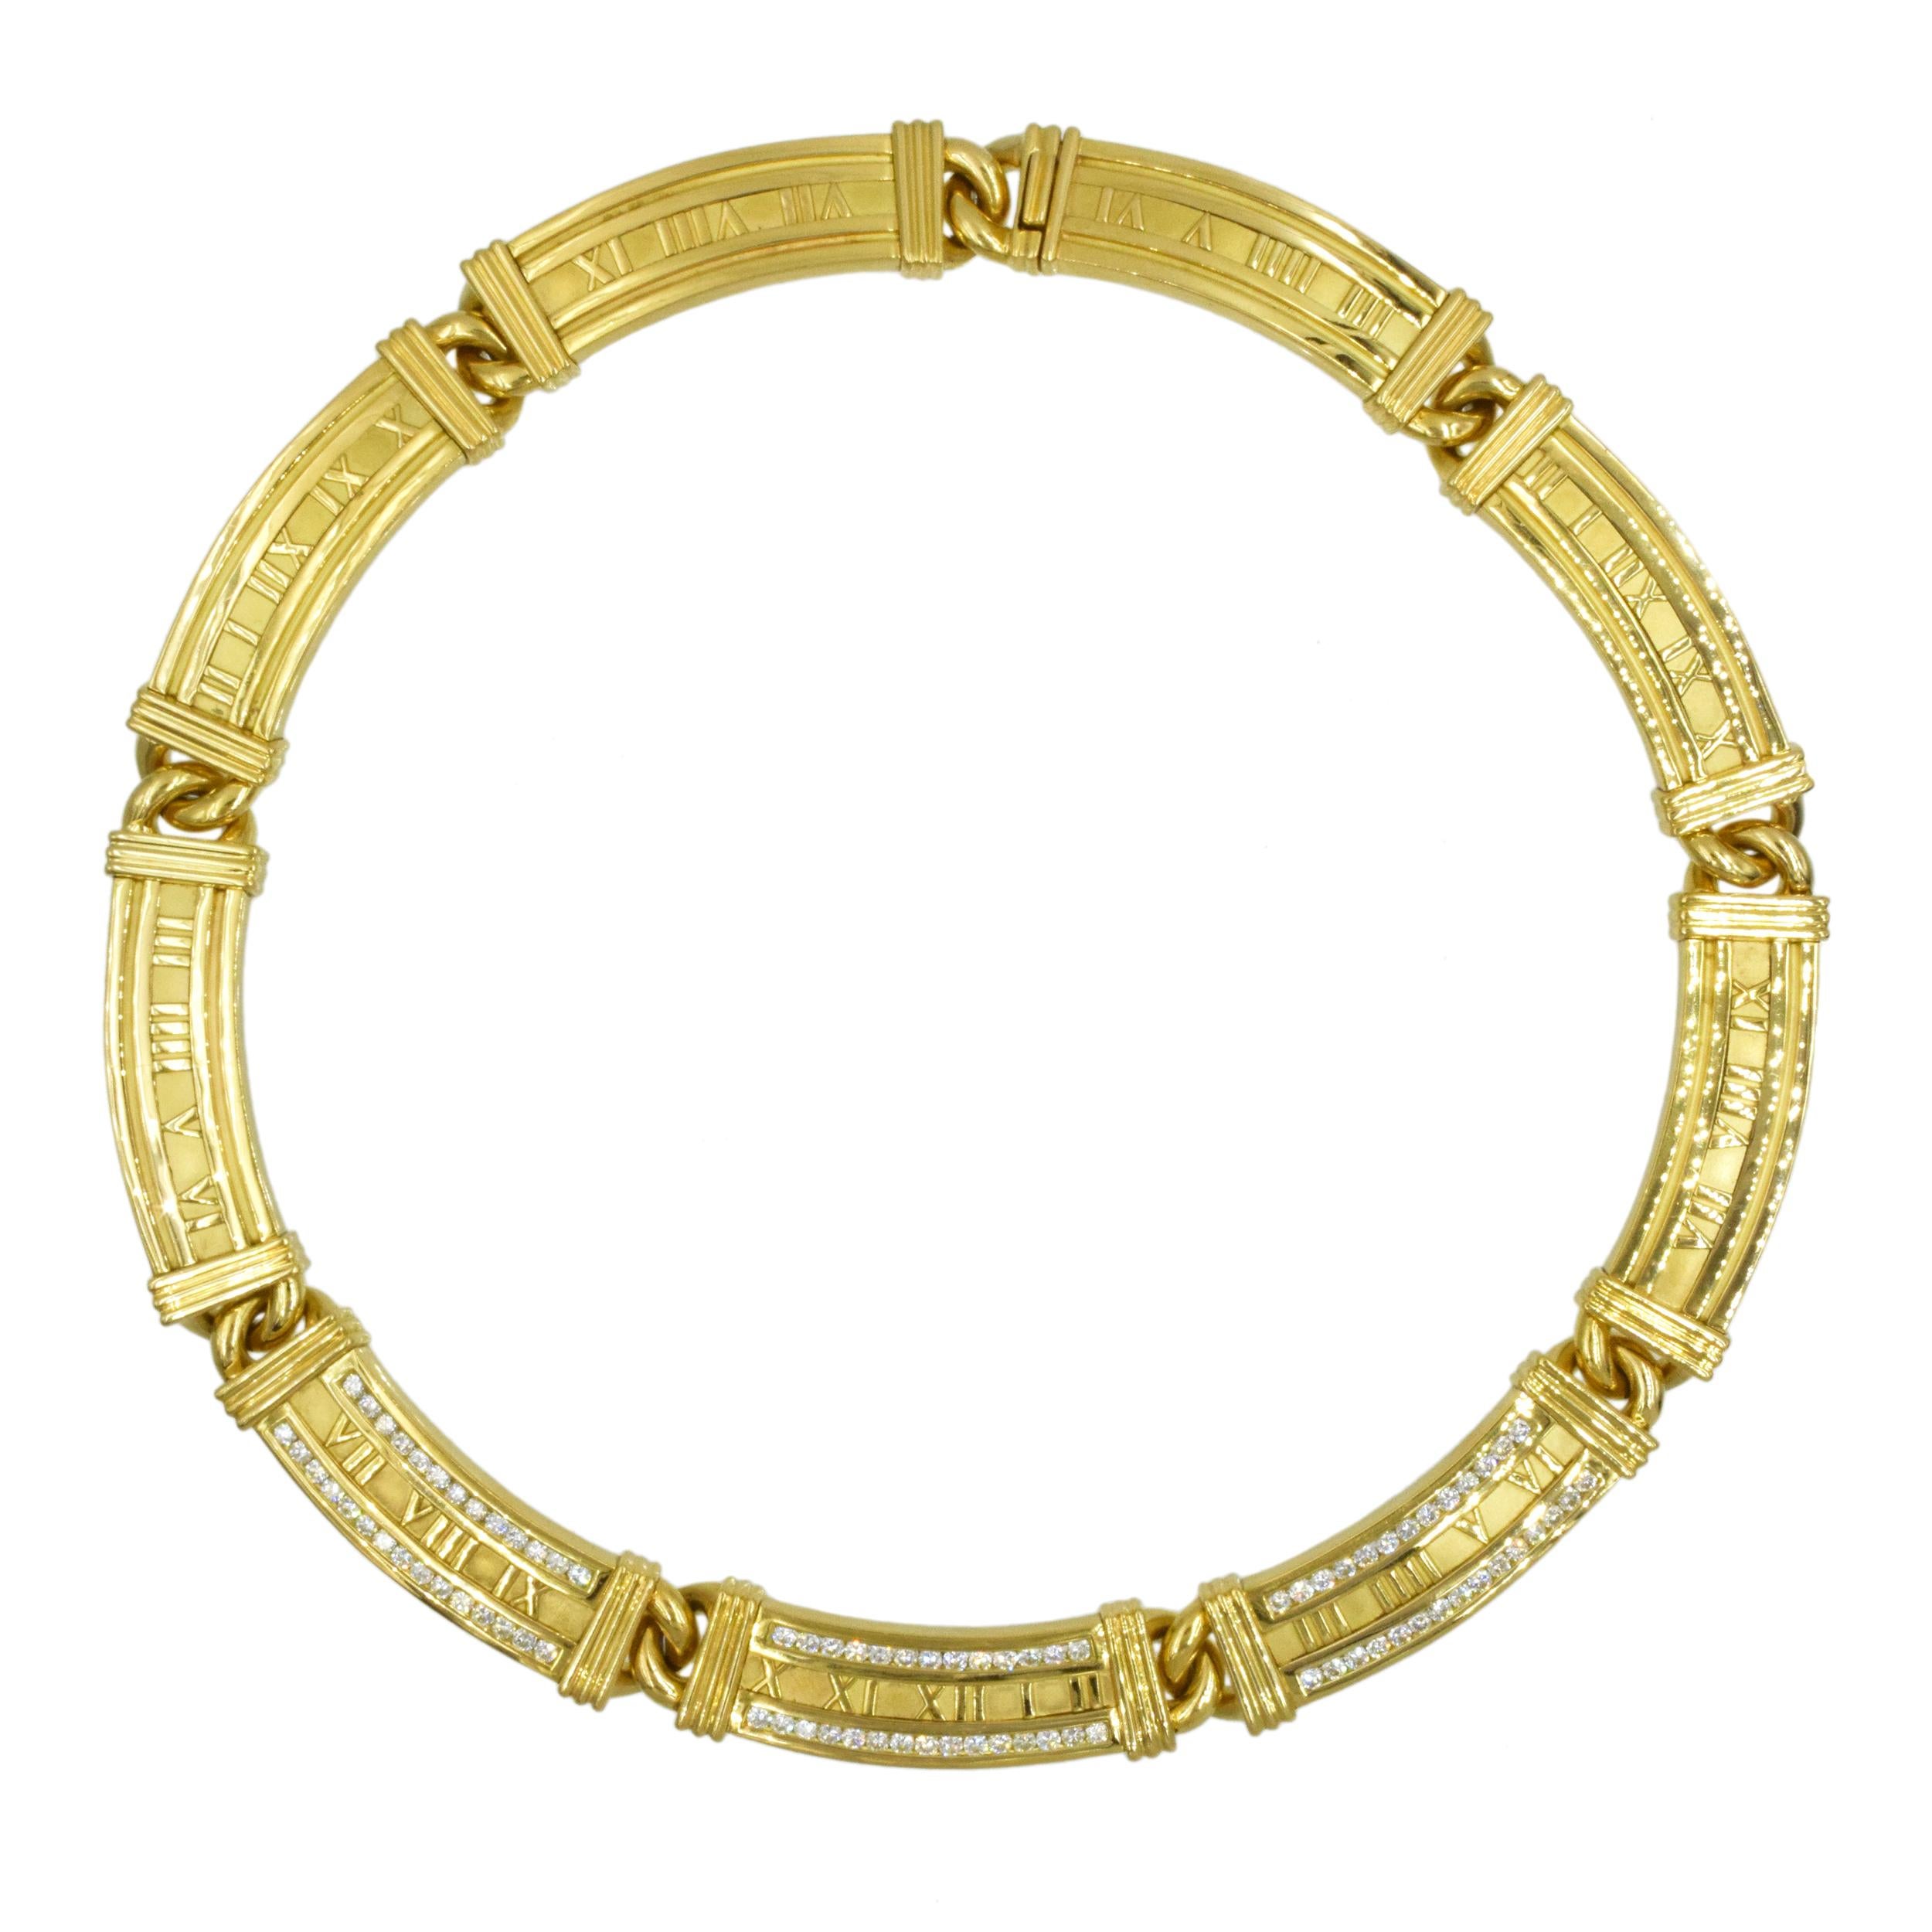 Tiffany & Co. "Atlas" Diamond Collection Necklace